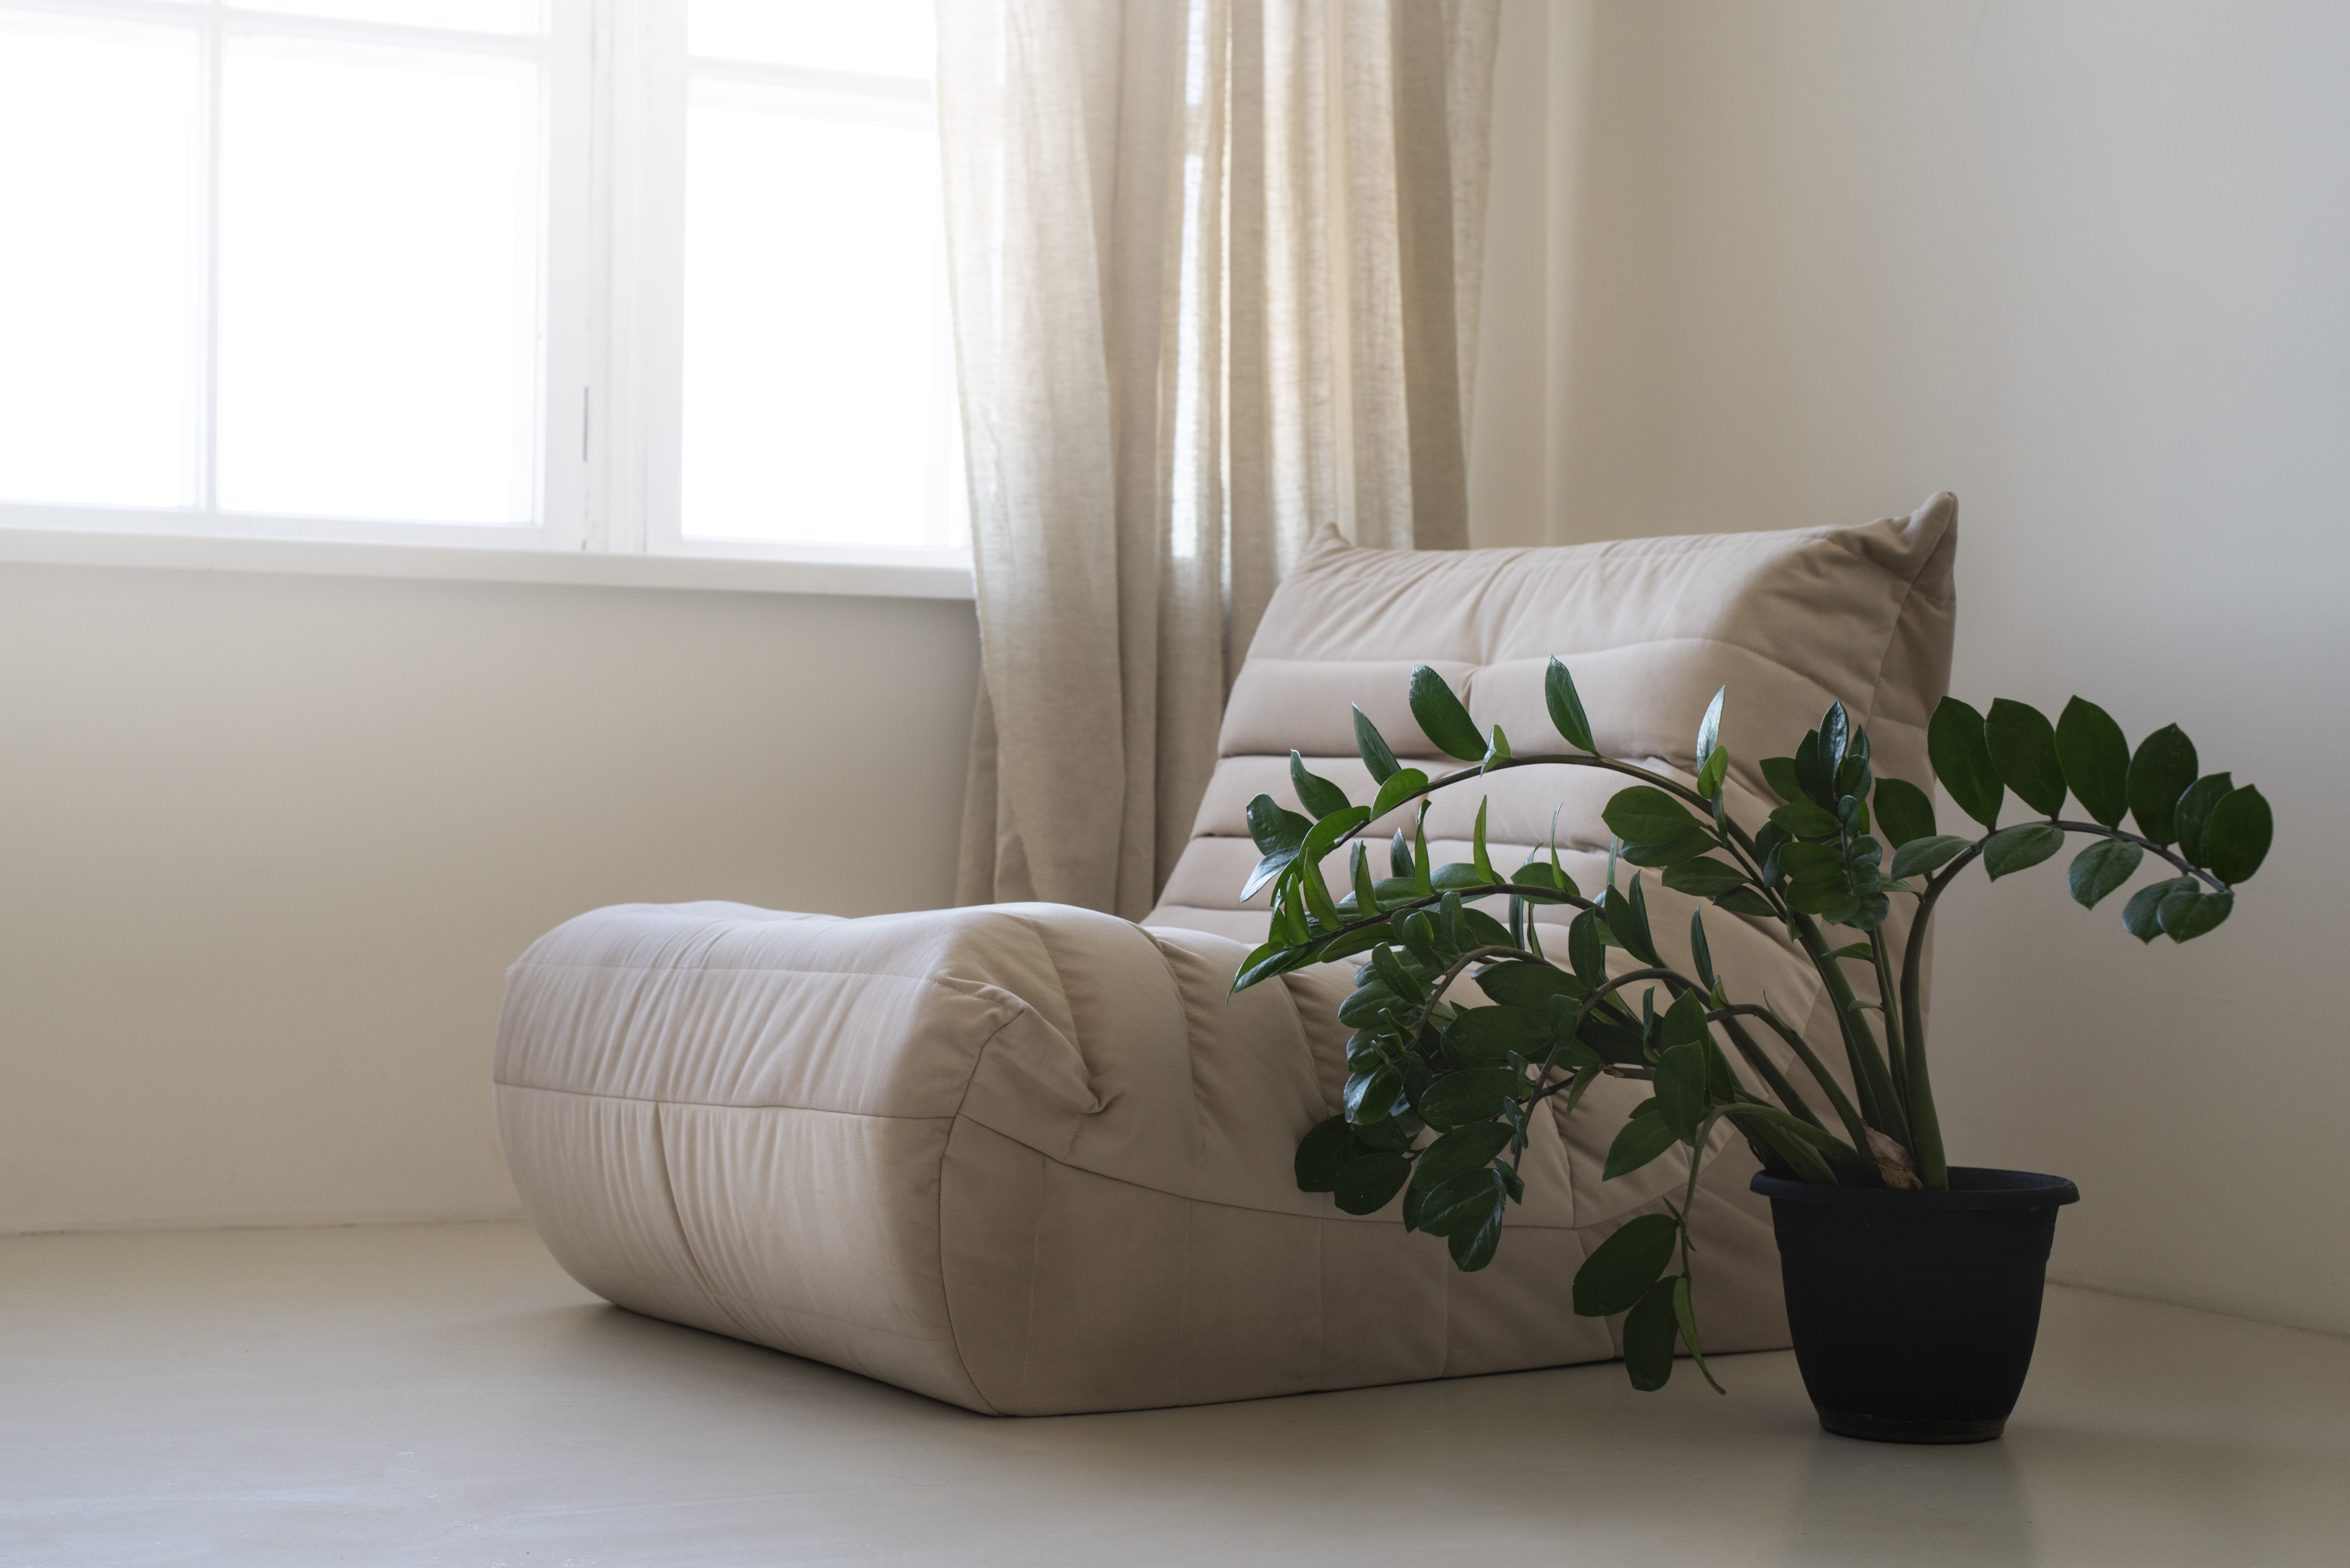 Bedroom Plants That’ll Improve Your Health